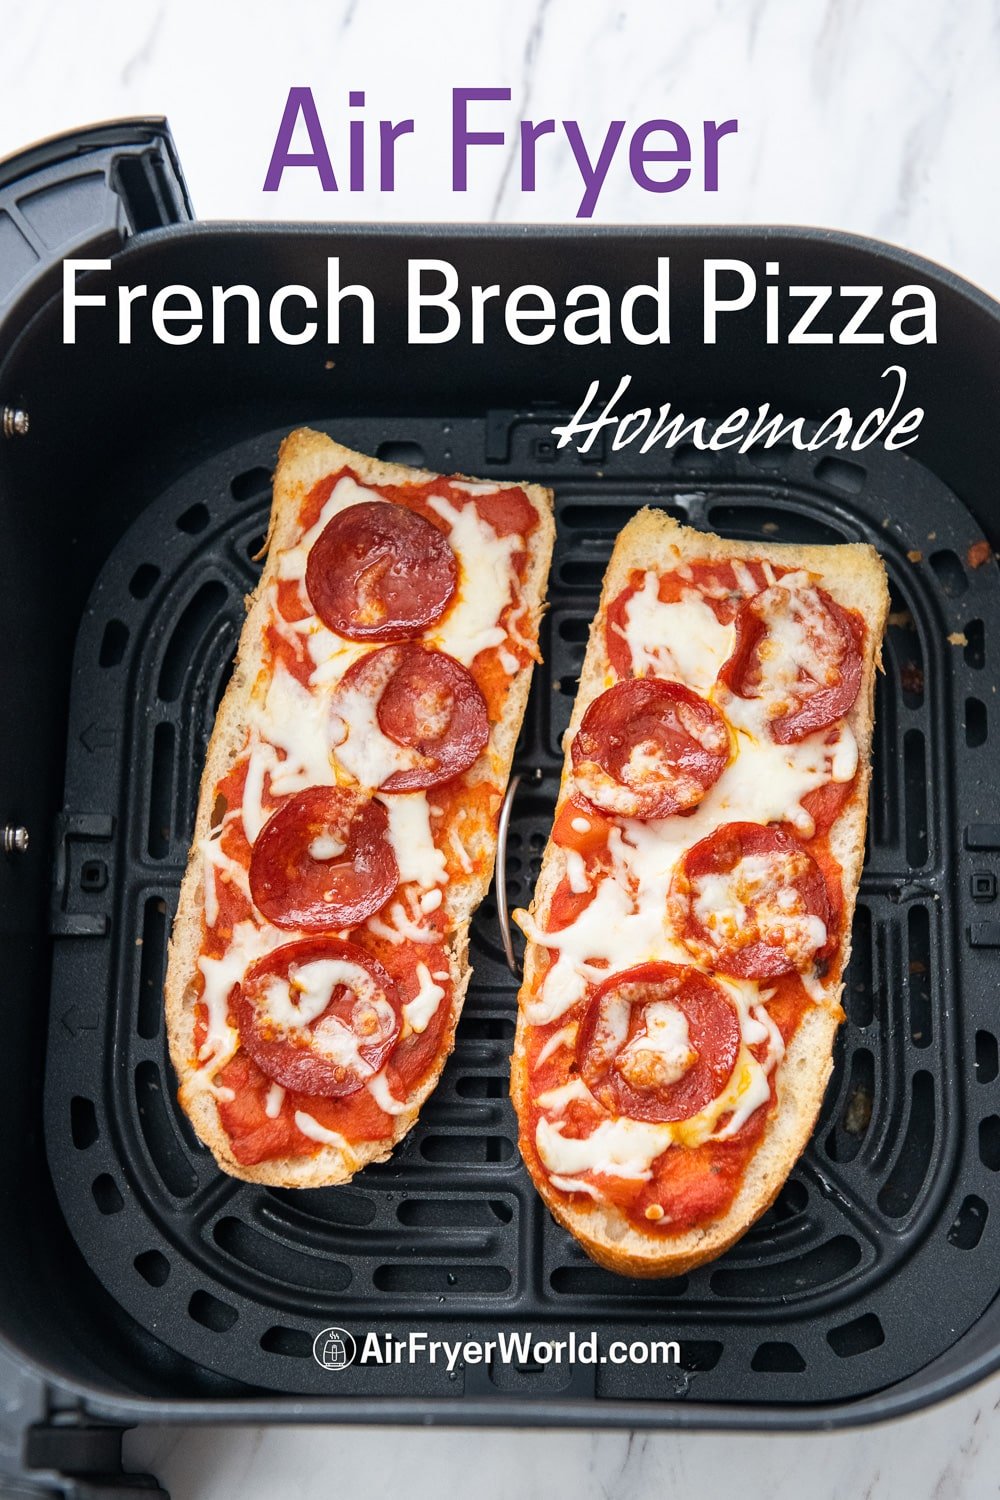 https://airfryerworld.com/images/Air-Fryer-French-Bread-Pizza-AirFryerWorld-3.jpg